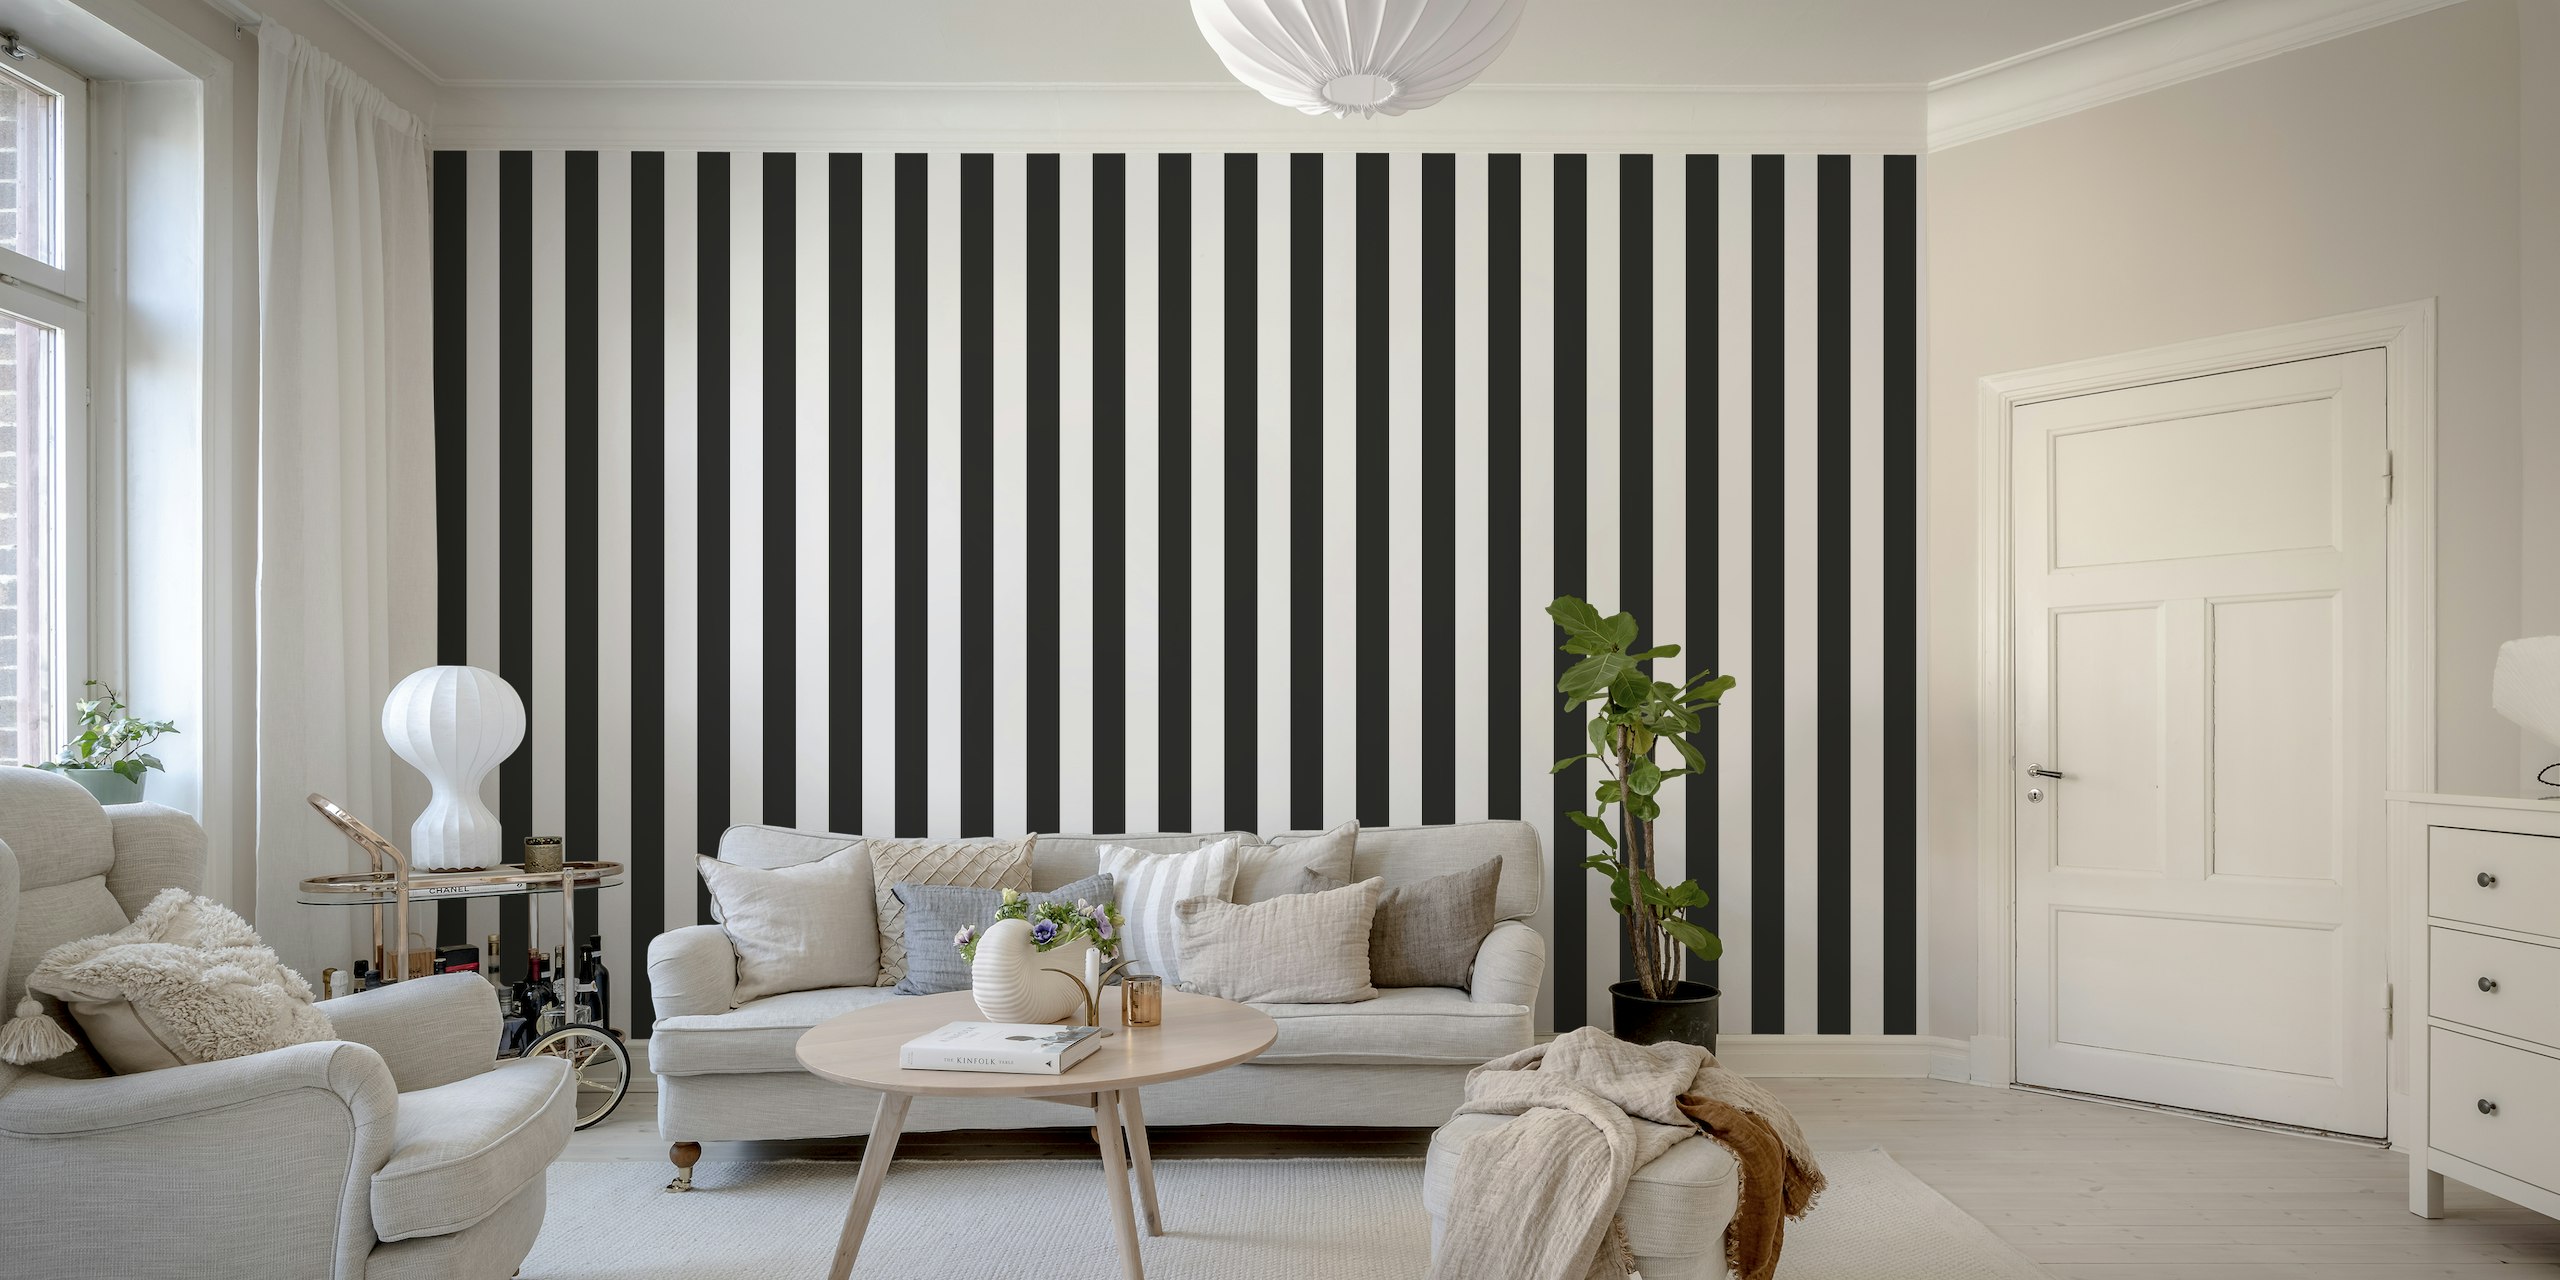 Black and white stripe pattern behang